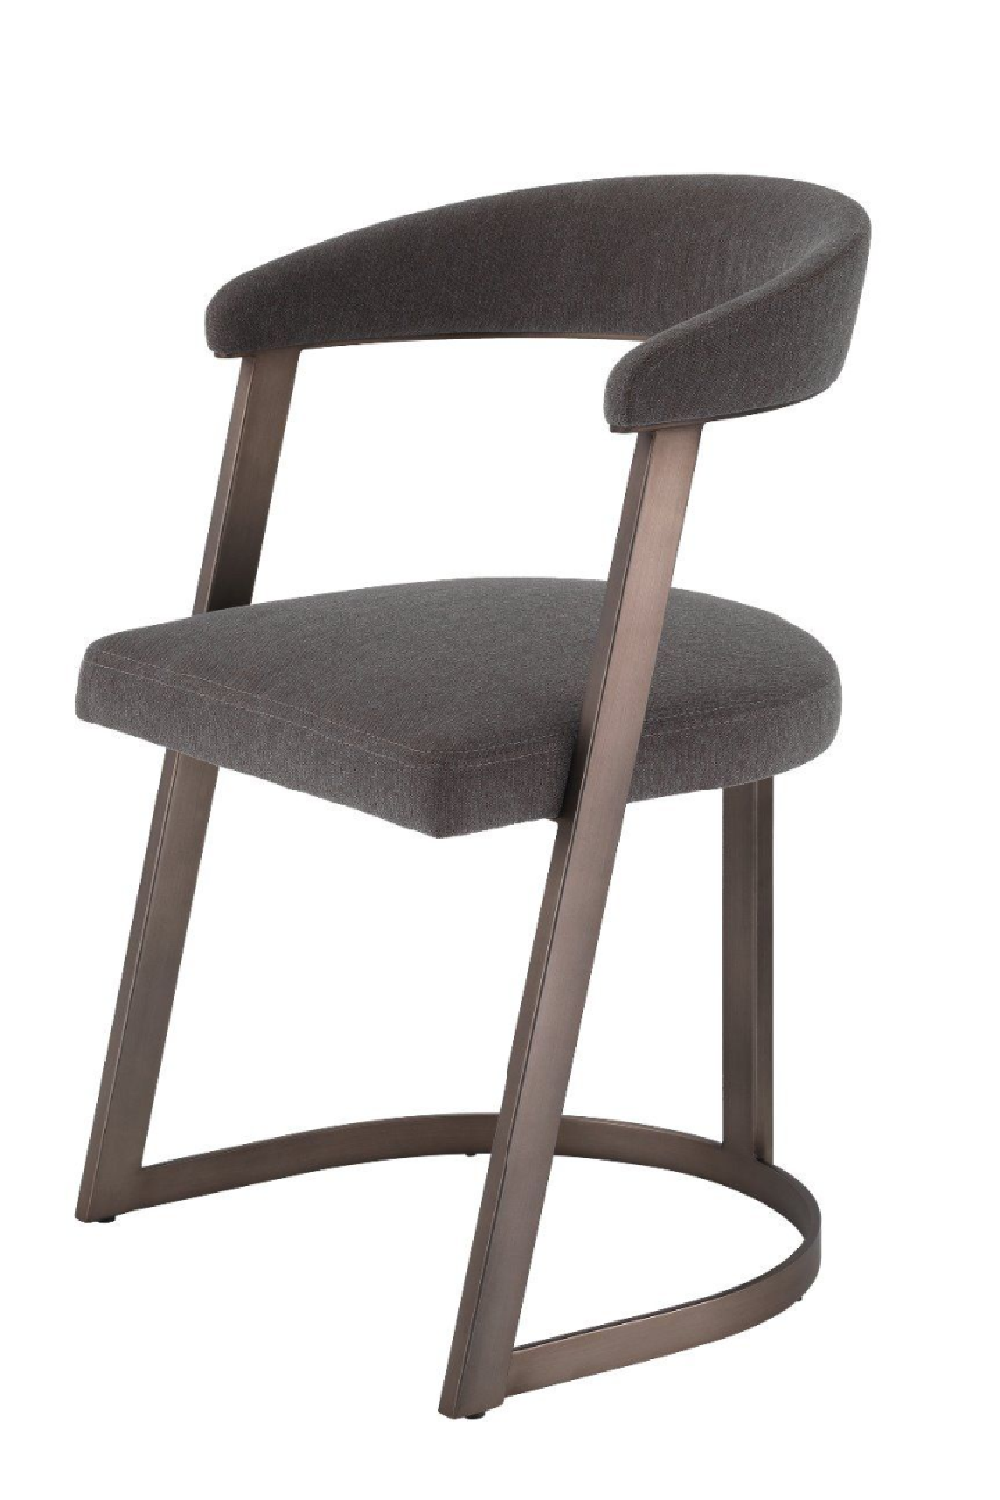 Gray Curved Retro Dining Chair | Eichholtz Dexter | Oroa.com